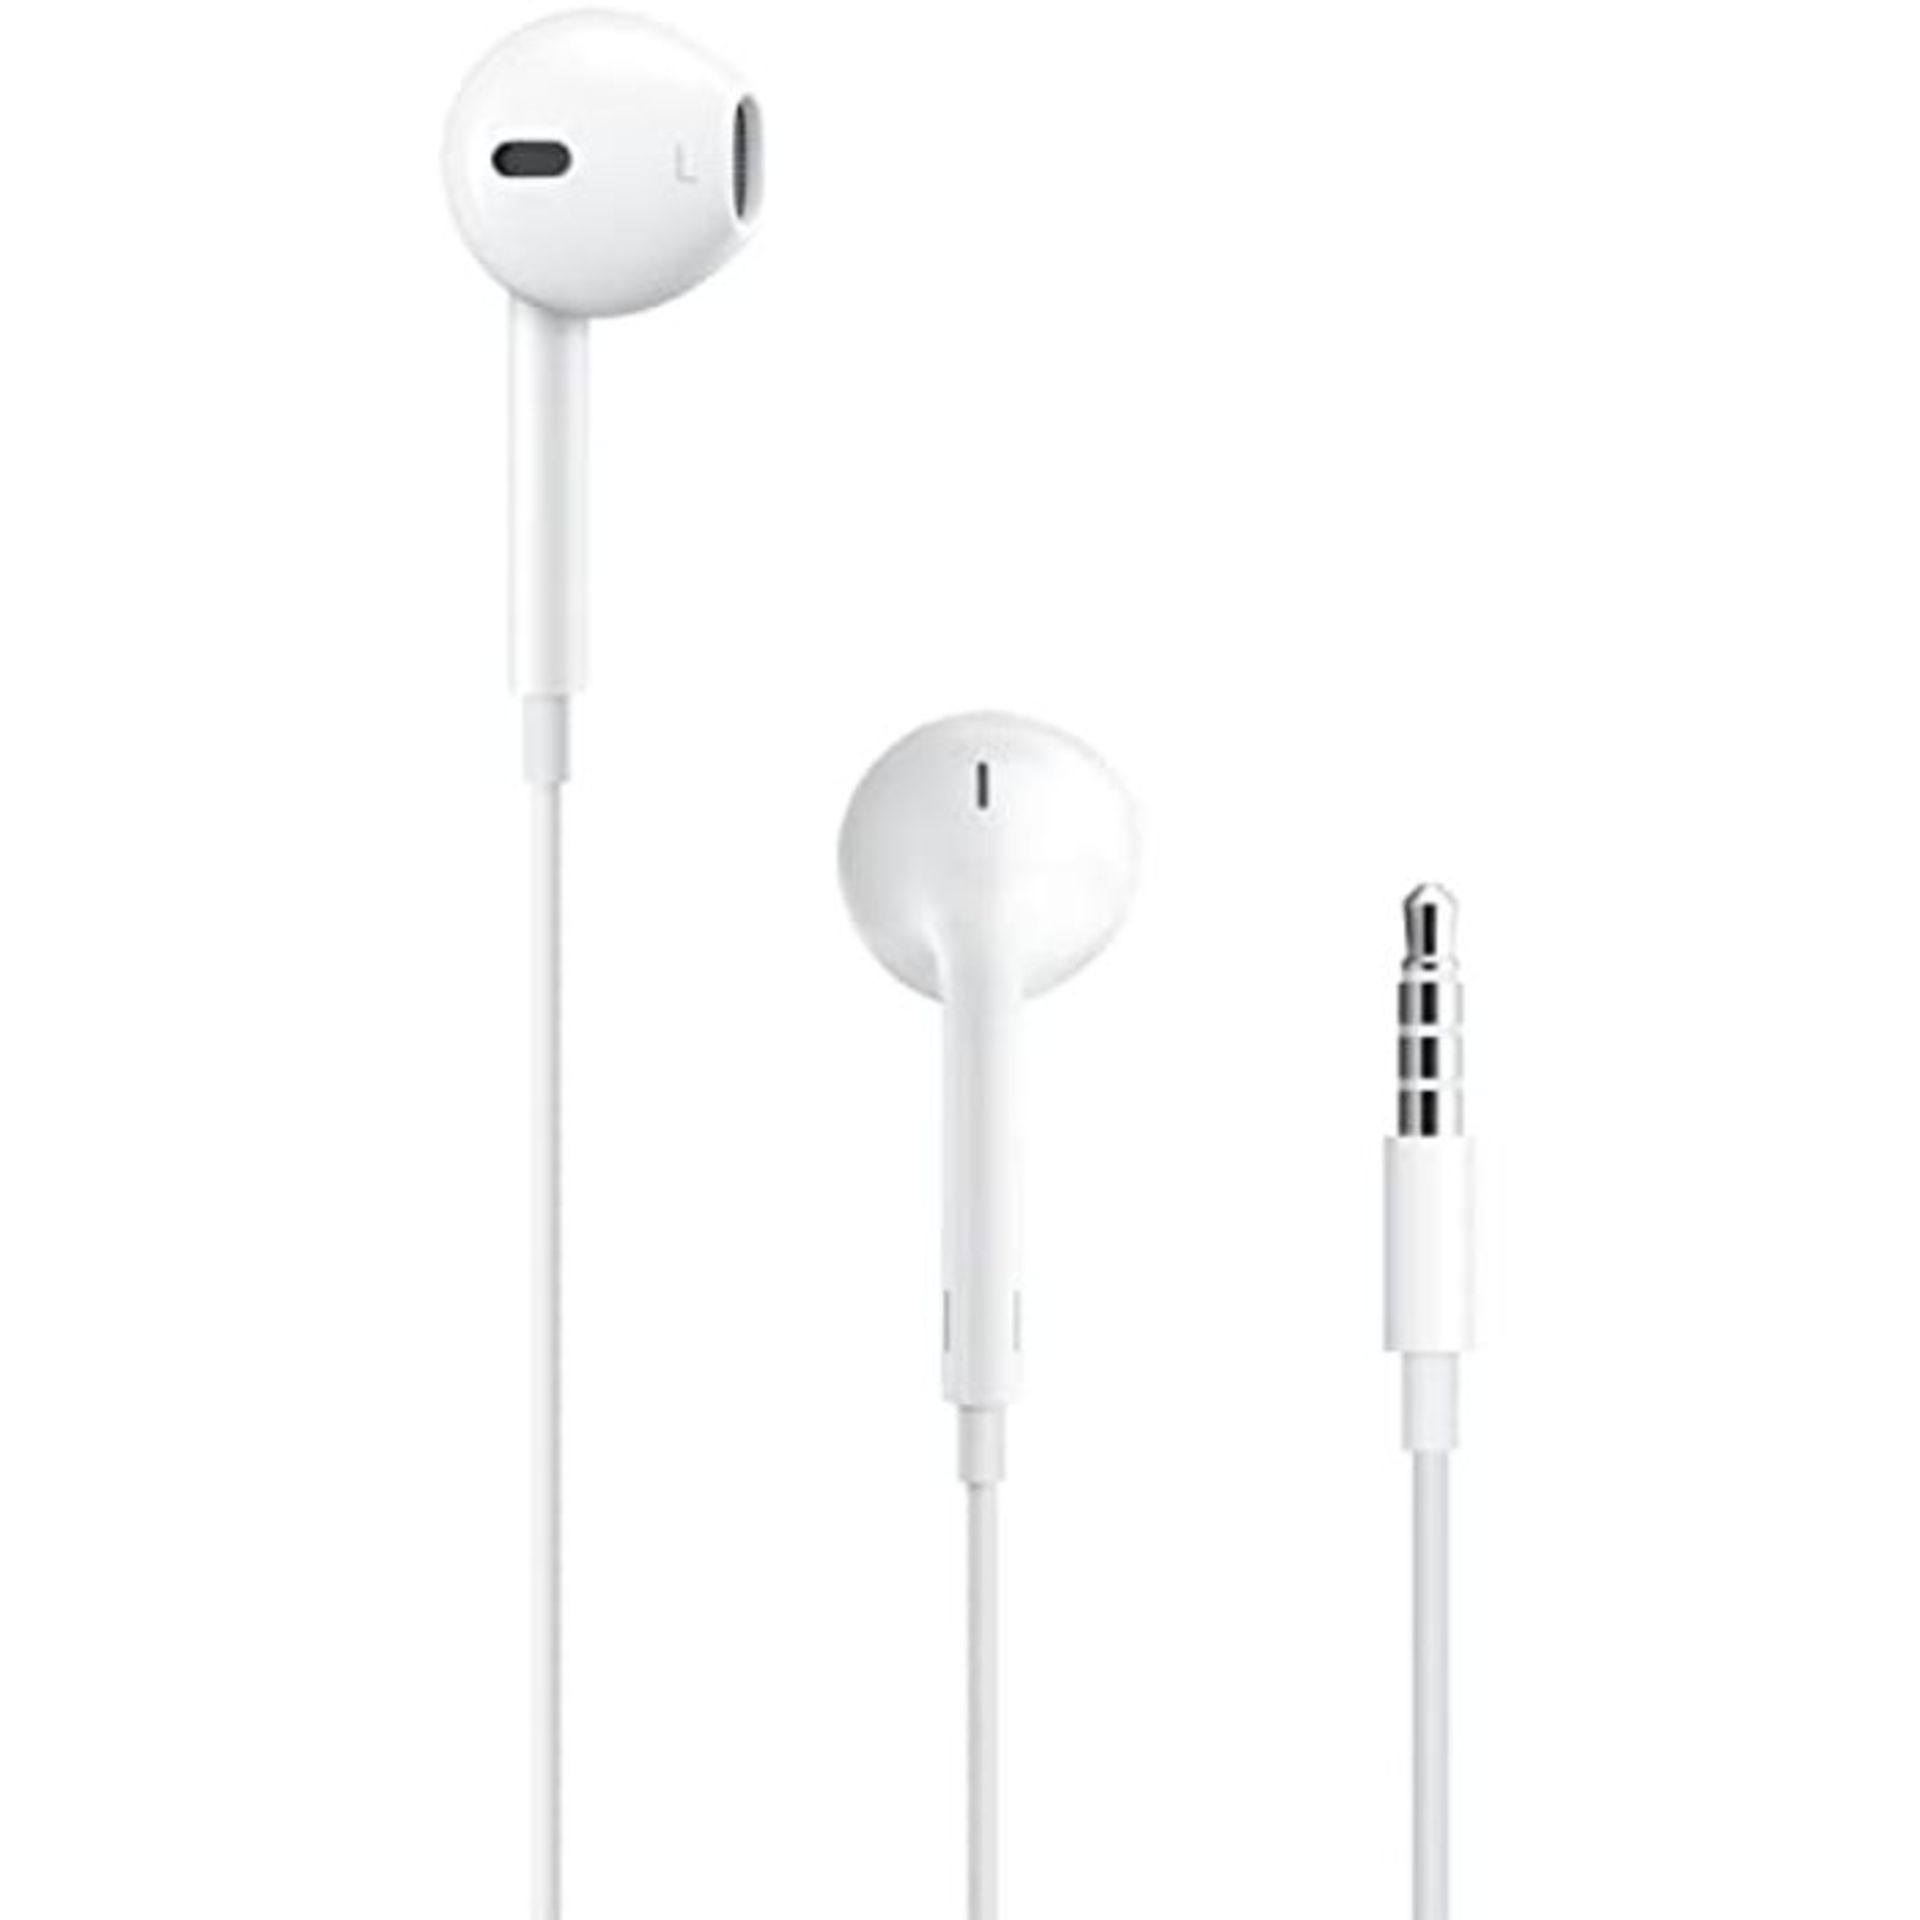 [CRACKED] EarPods with 3.5mm Headphone Plug